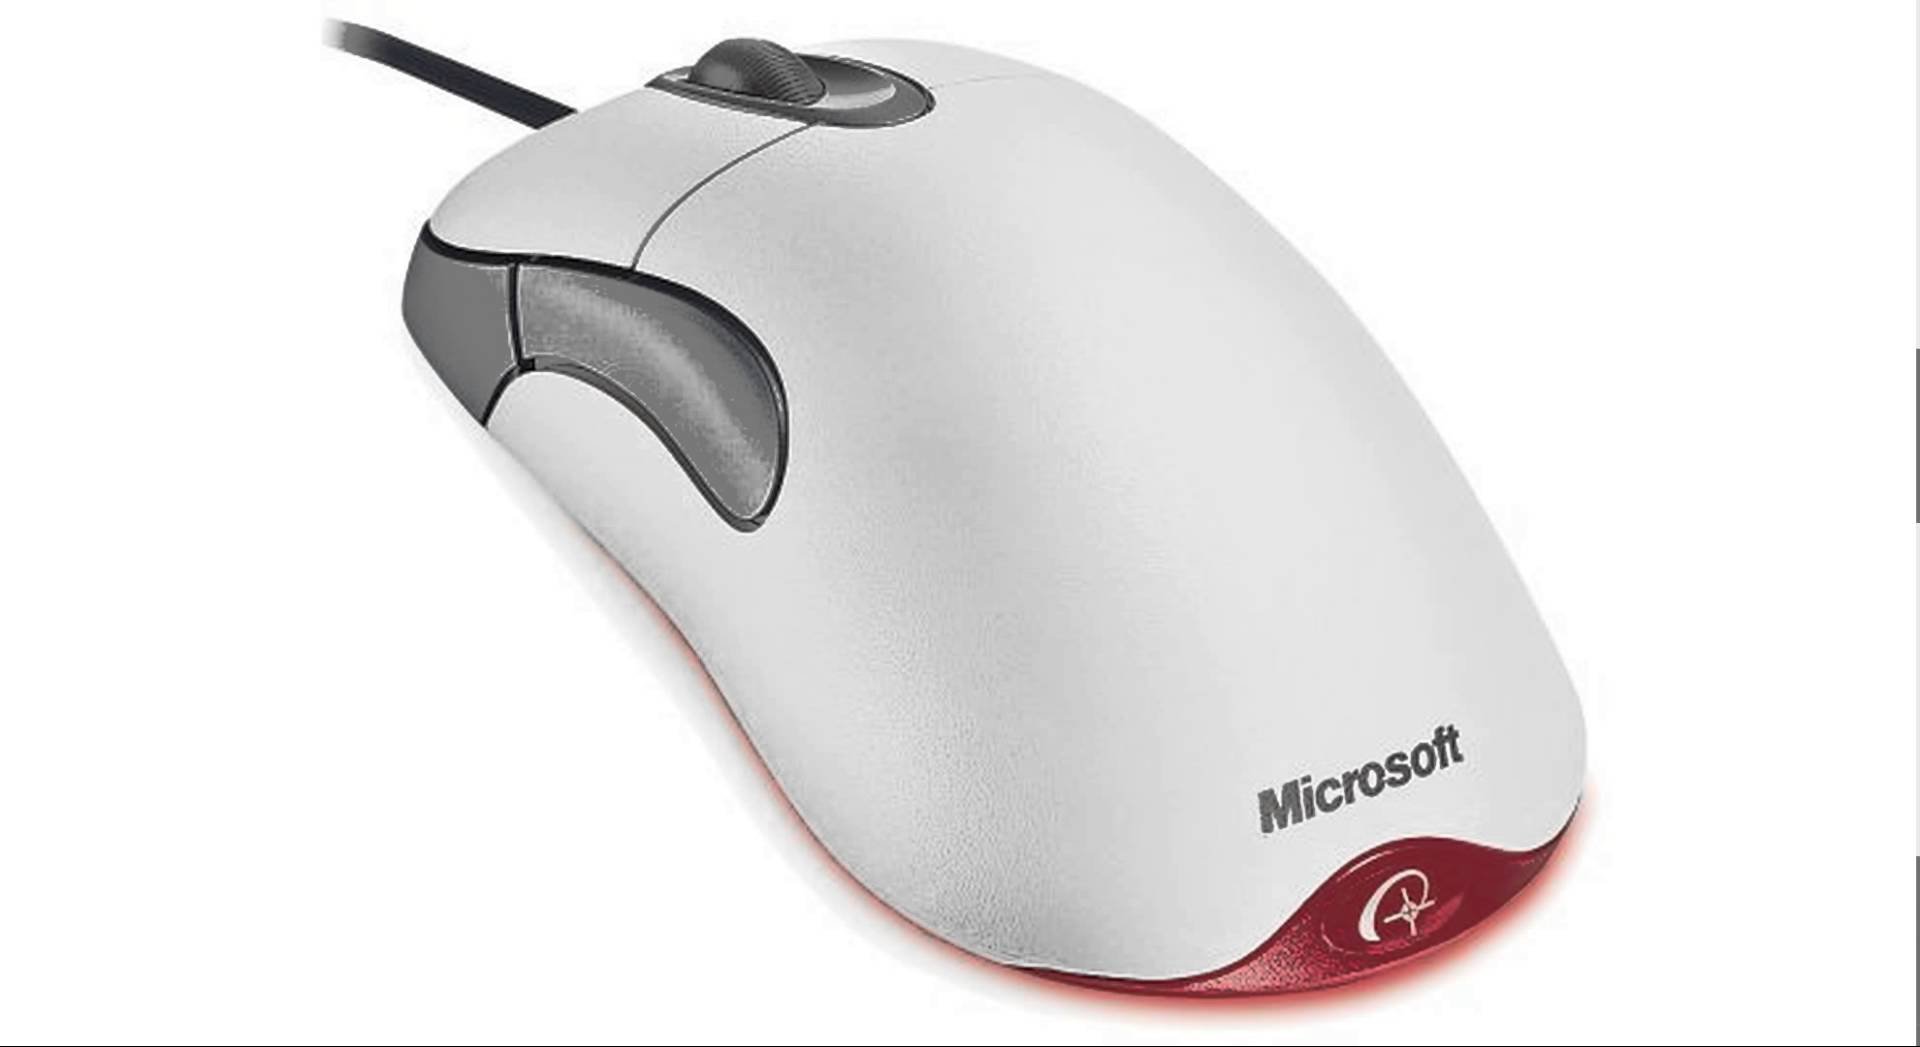 Microsoft trackball optical mouse 1.0 driver